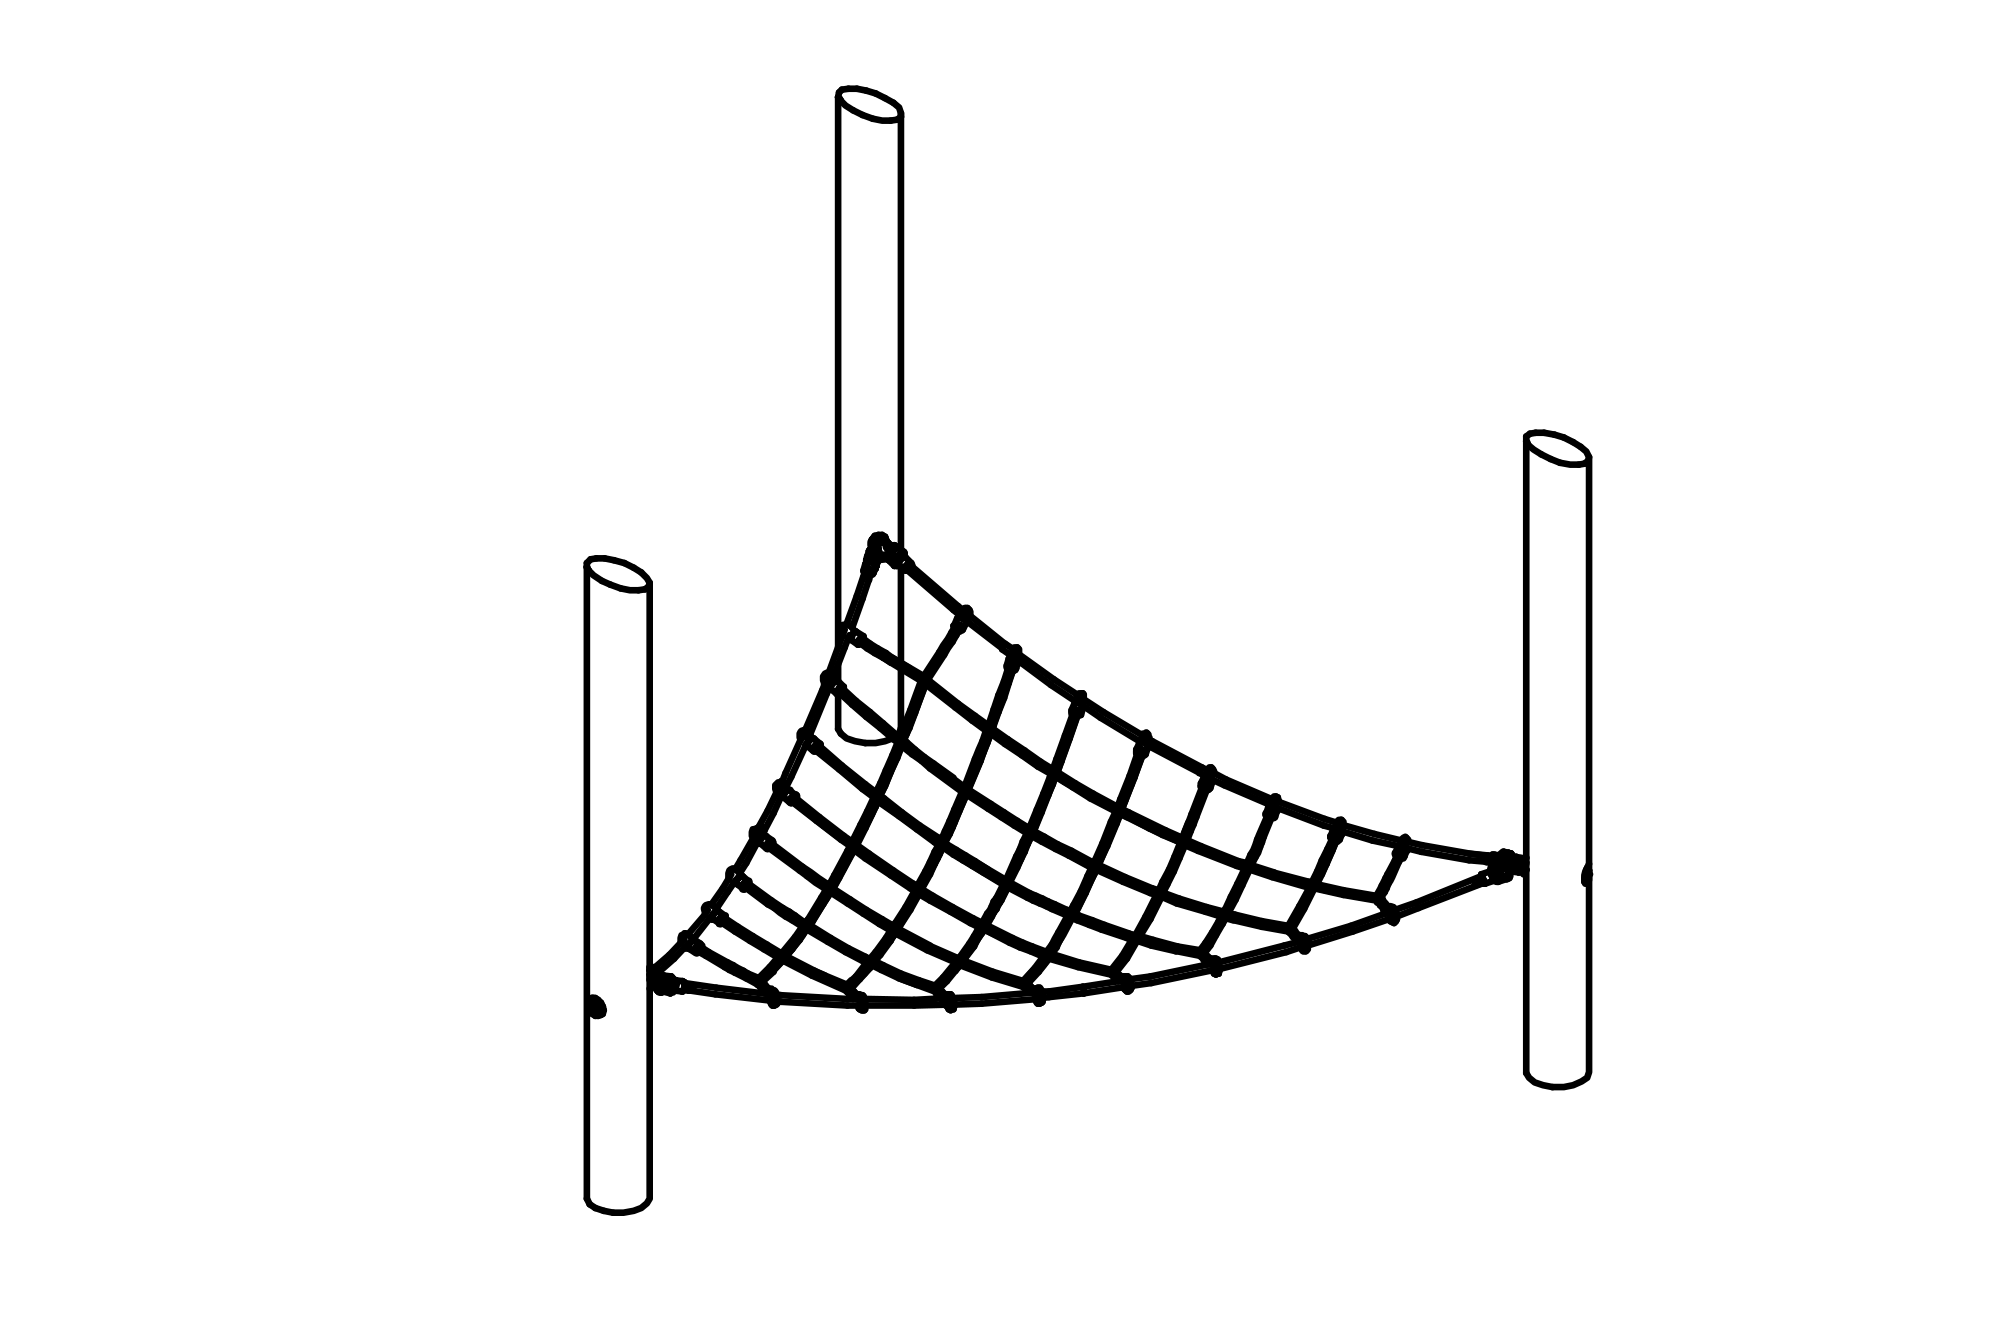 Horizontal triangular net, wide-meshed